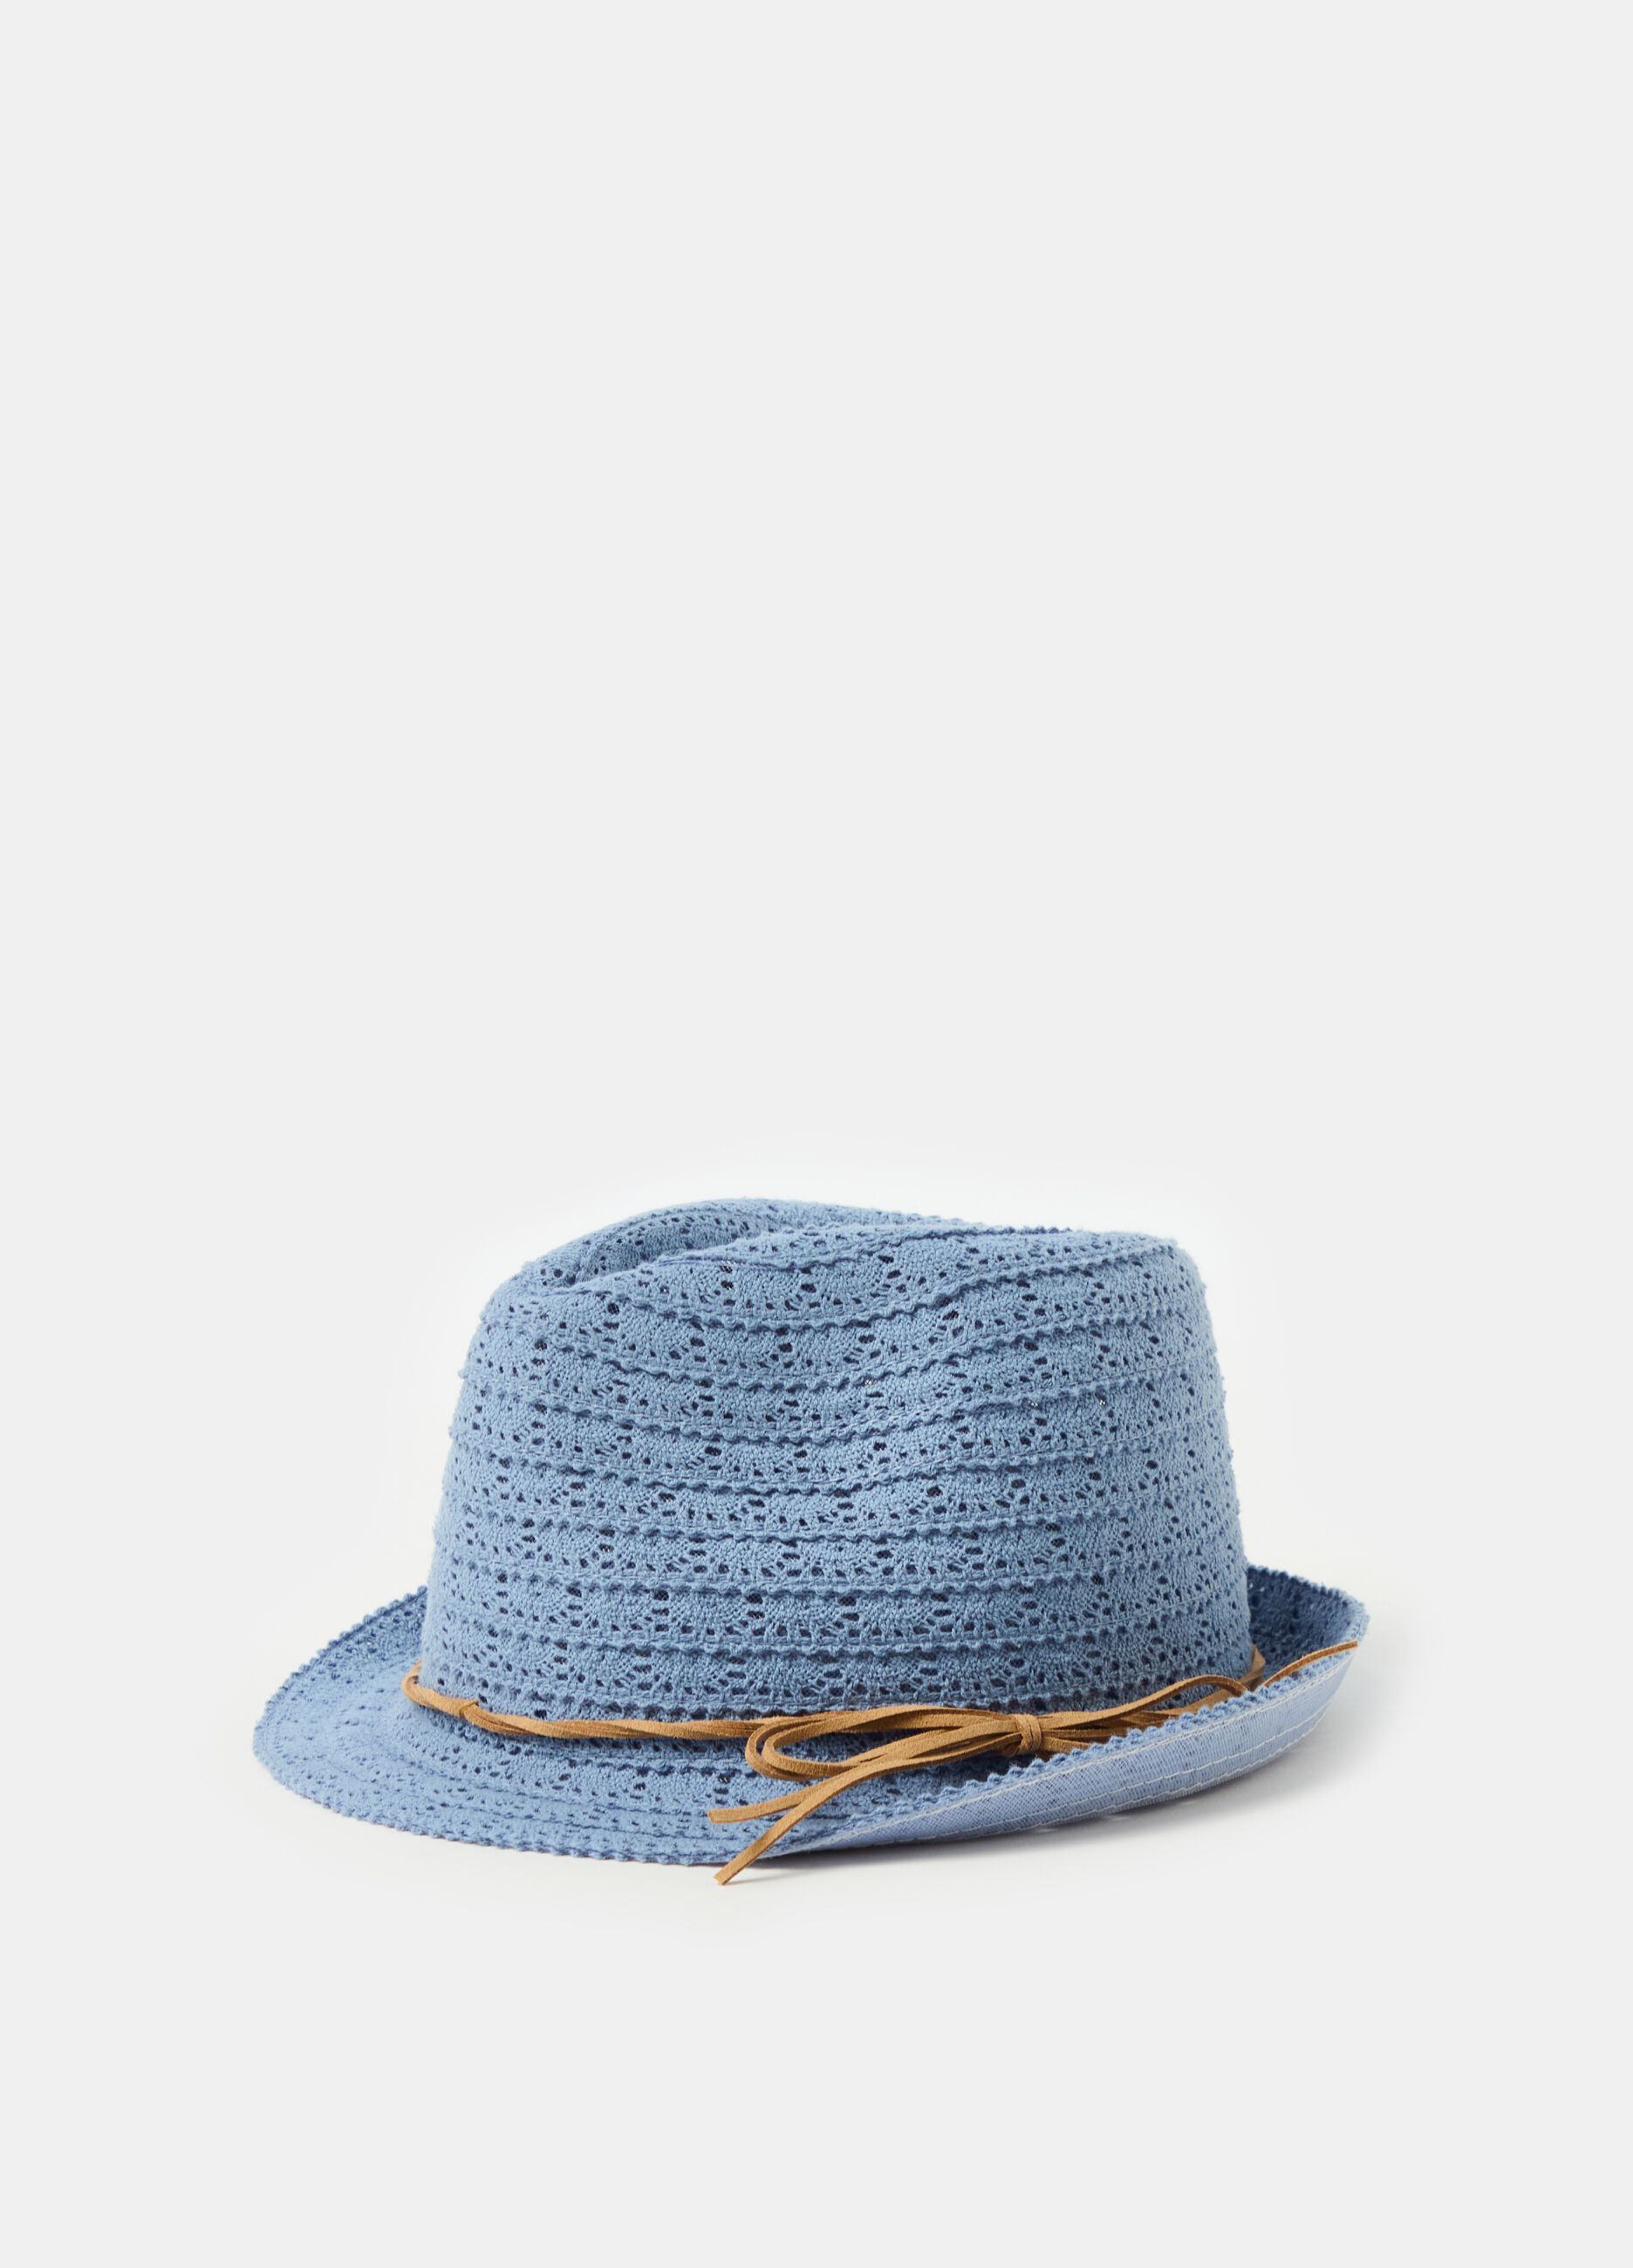 Trilby hat with openwork design